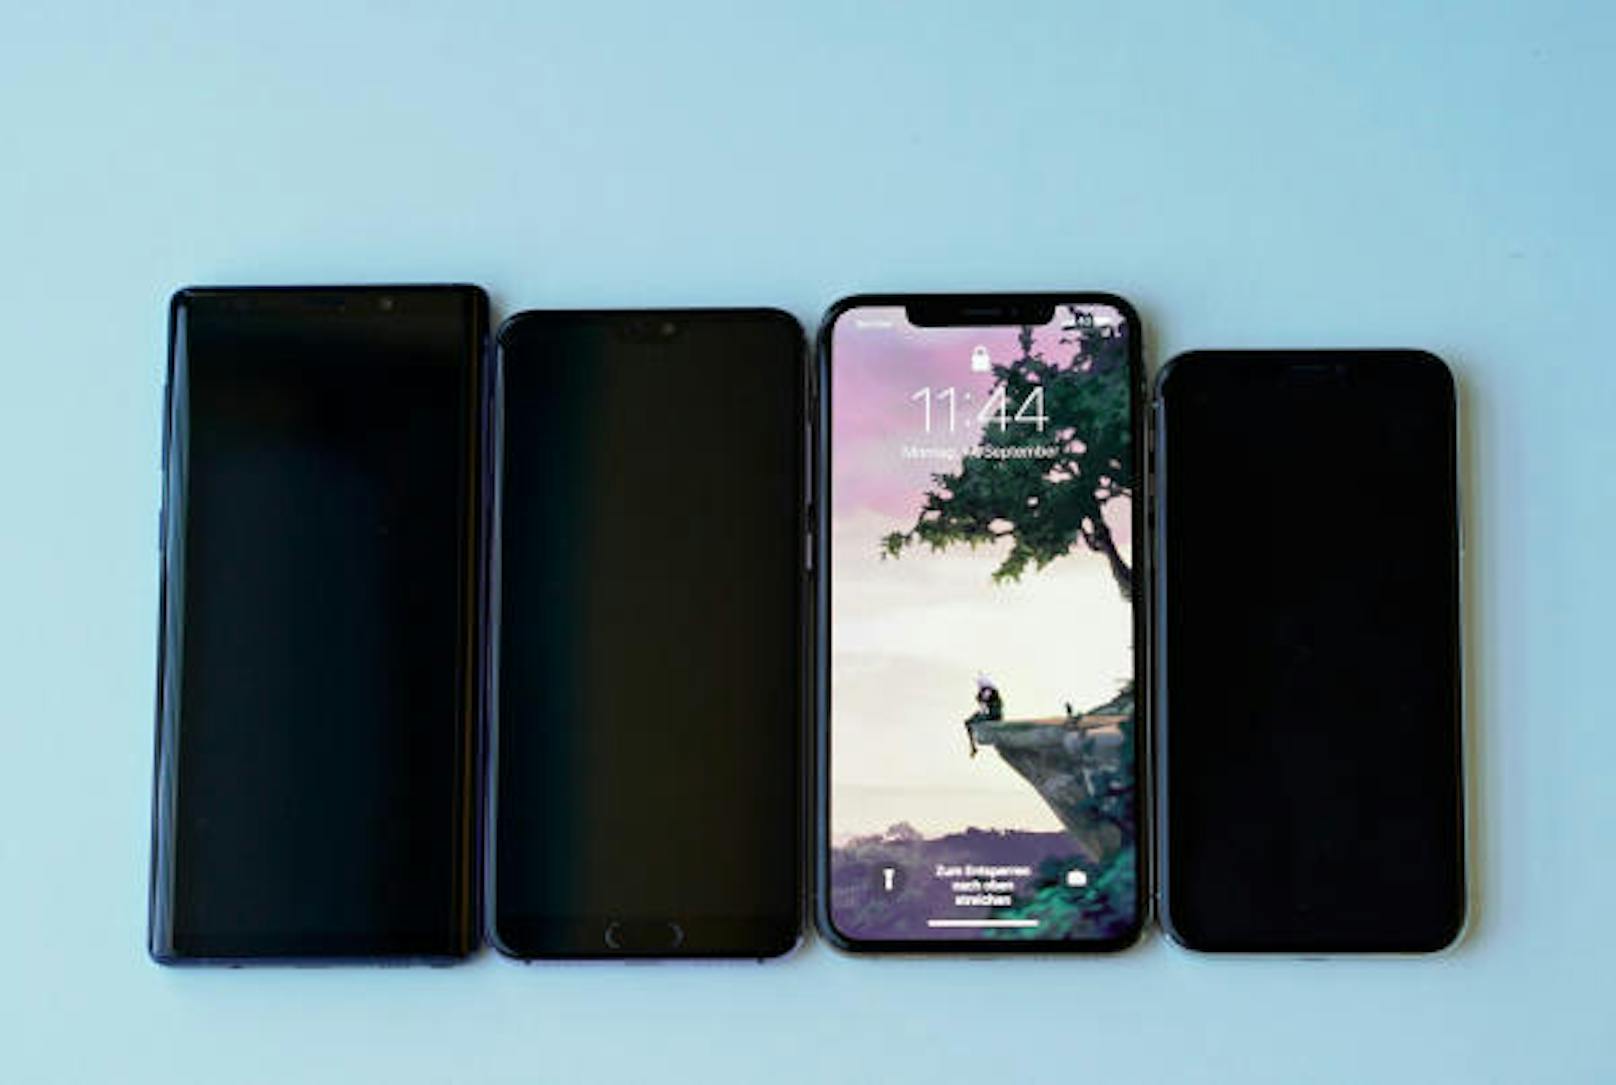 Größenvergleich von links nach rechts: Samsung Note 9 (6,4 Zoll), Huawei P20 Pro (6,1 Zoll), iPhone XS Max (6,5 Zoll), iPhone X (5,8 Zoll).